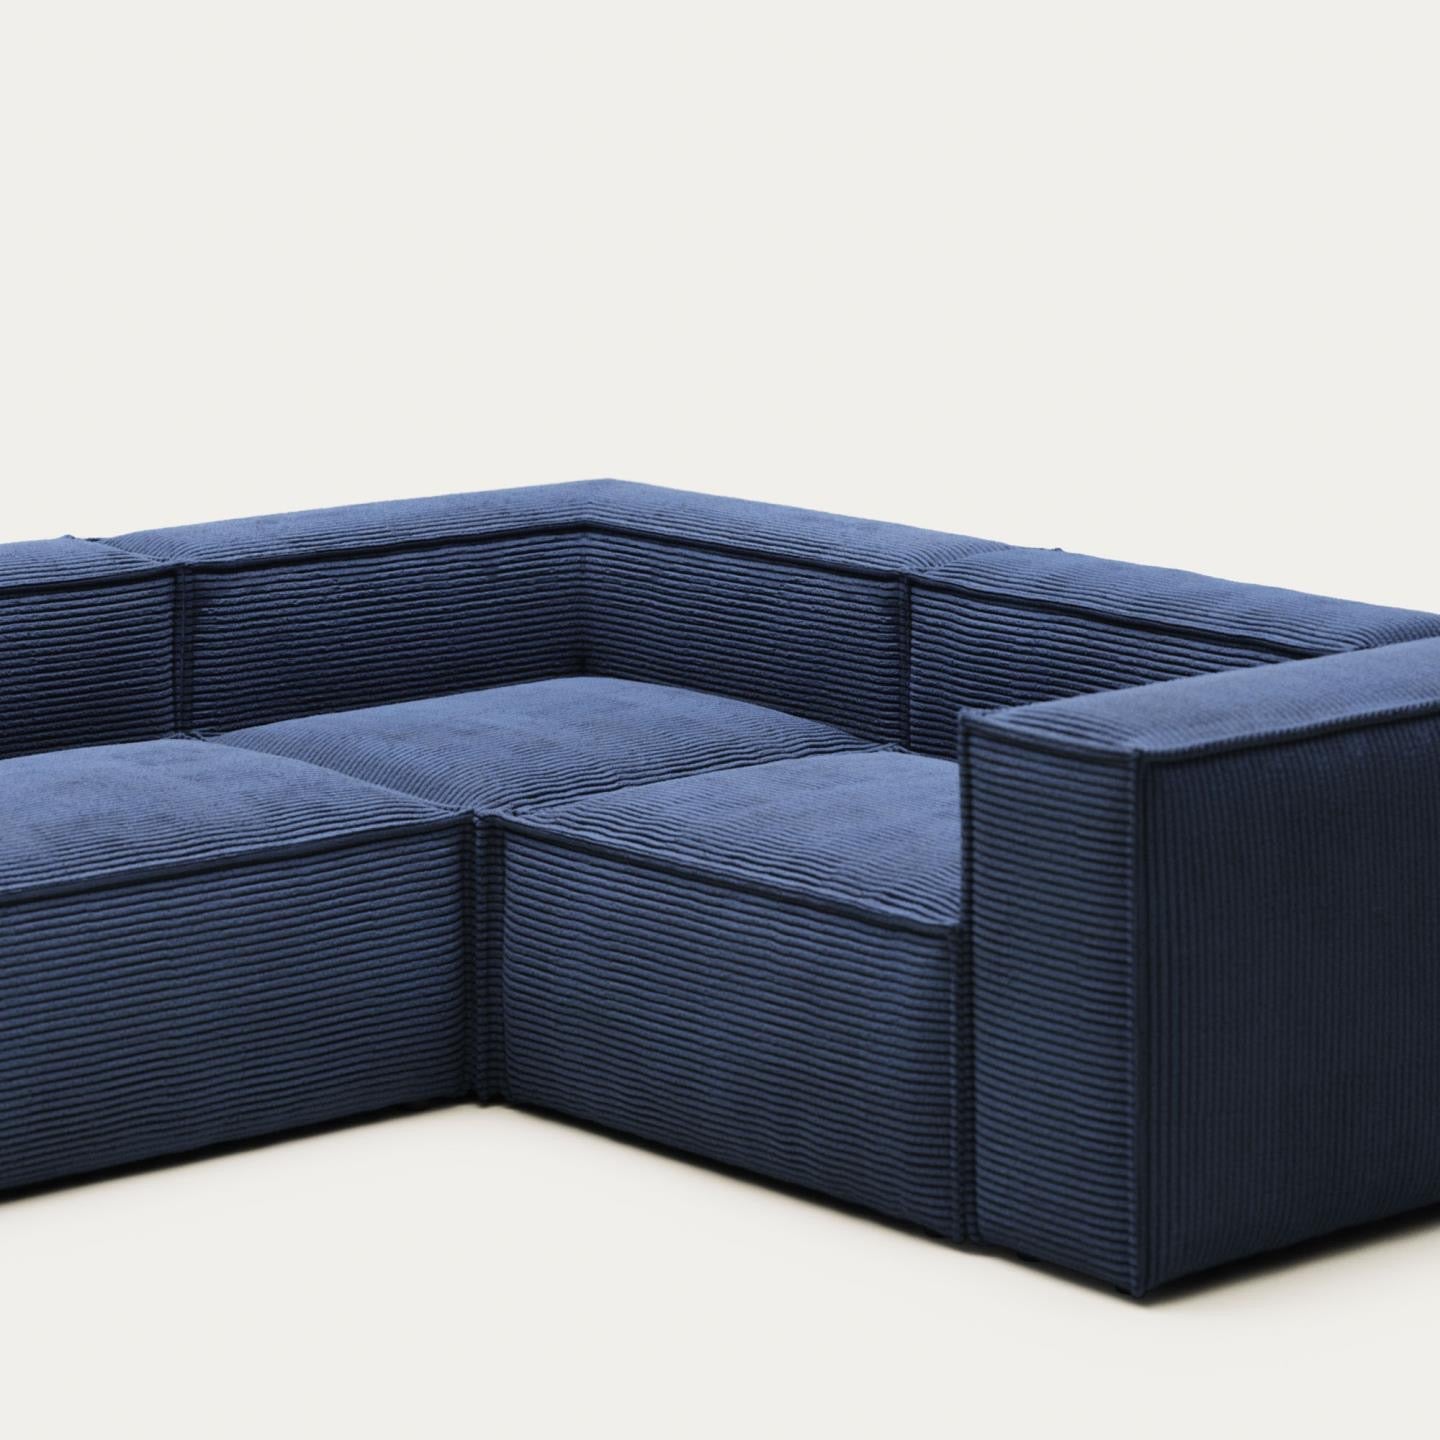 Lund 3 Seater Corner Sofa - Blue Corduroy